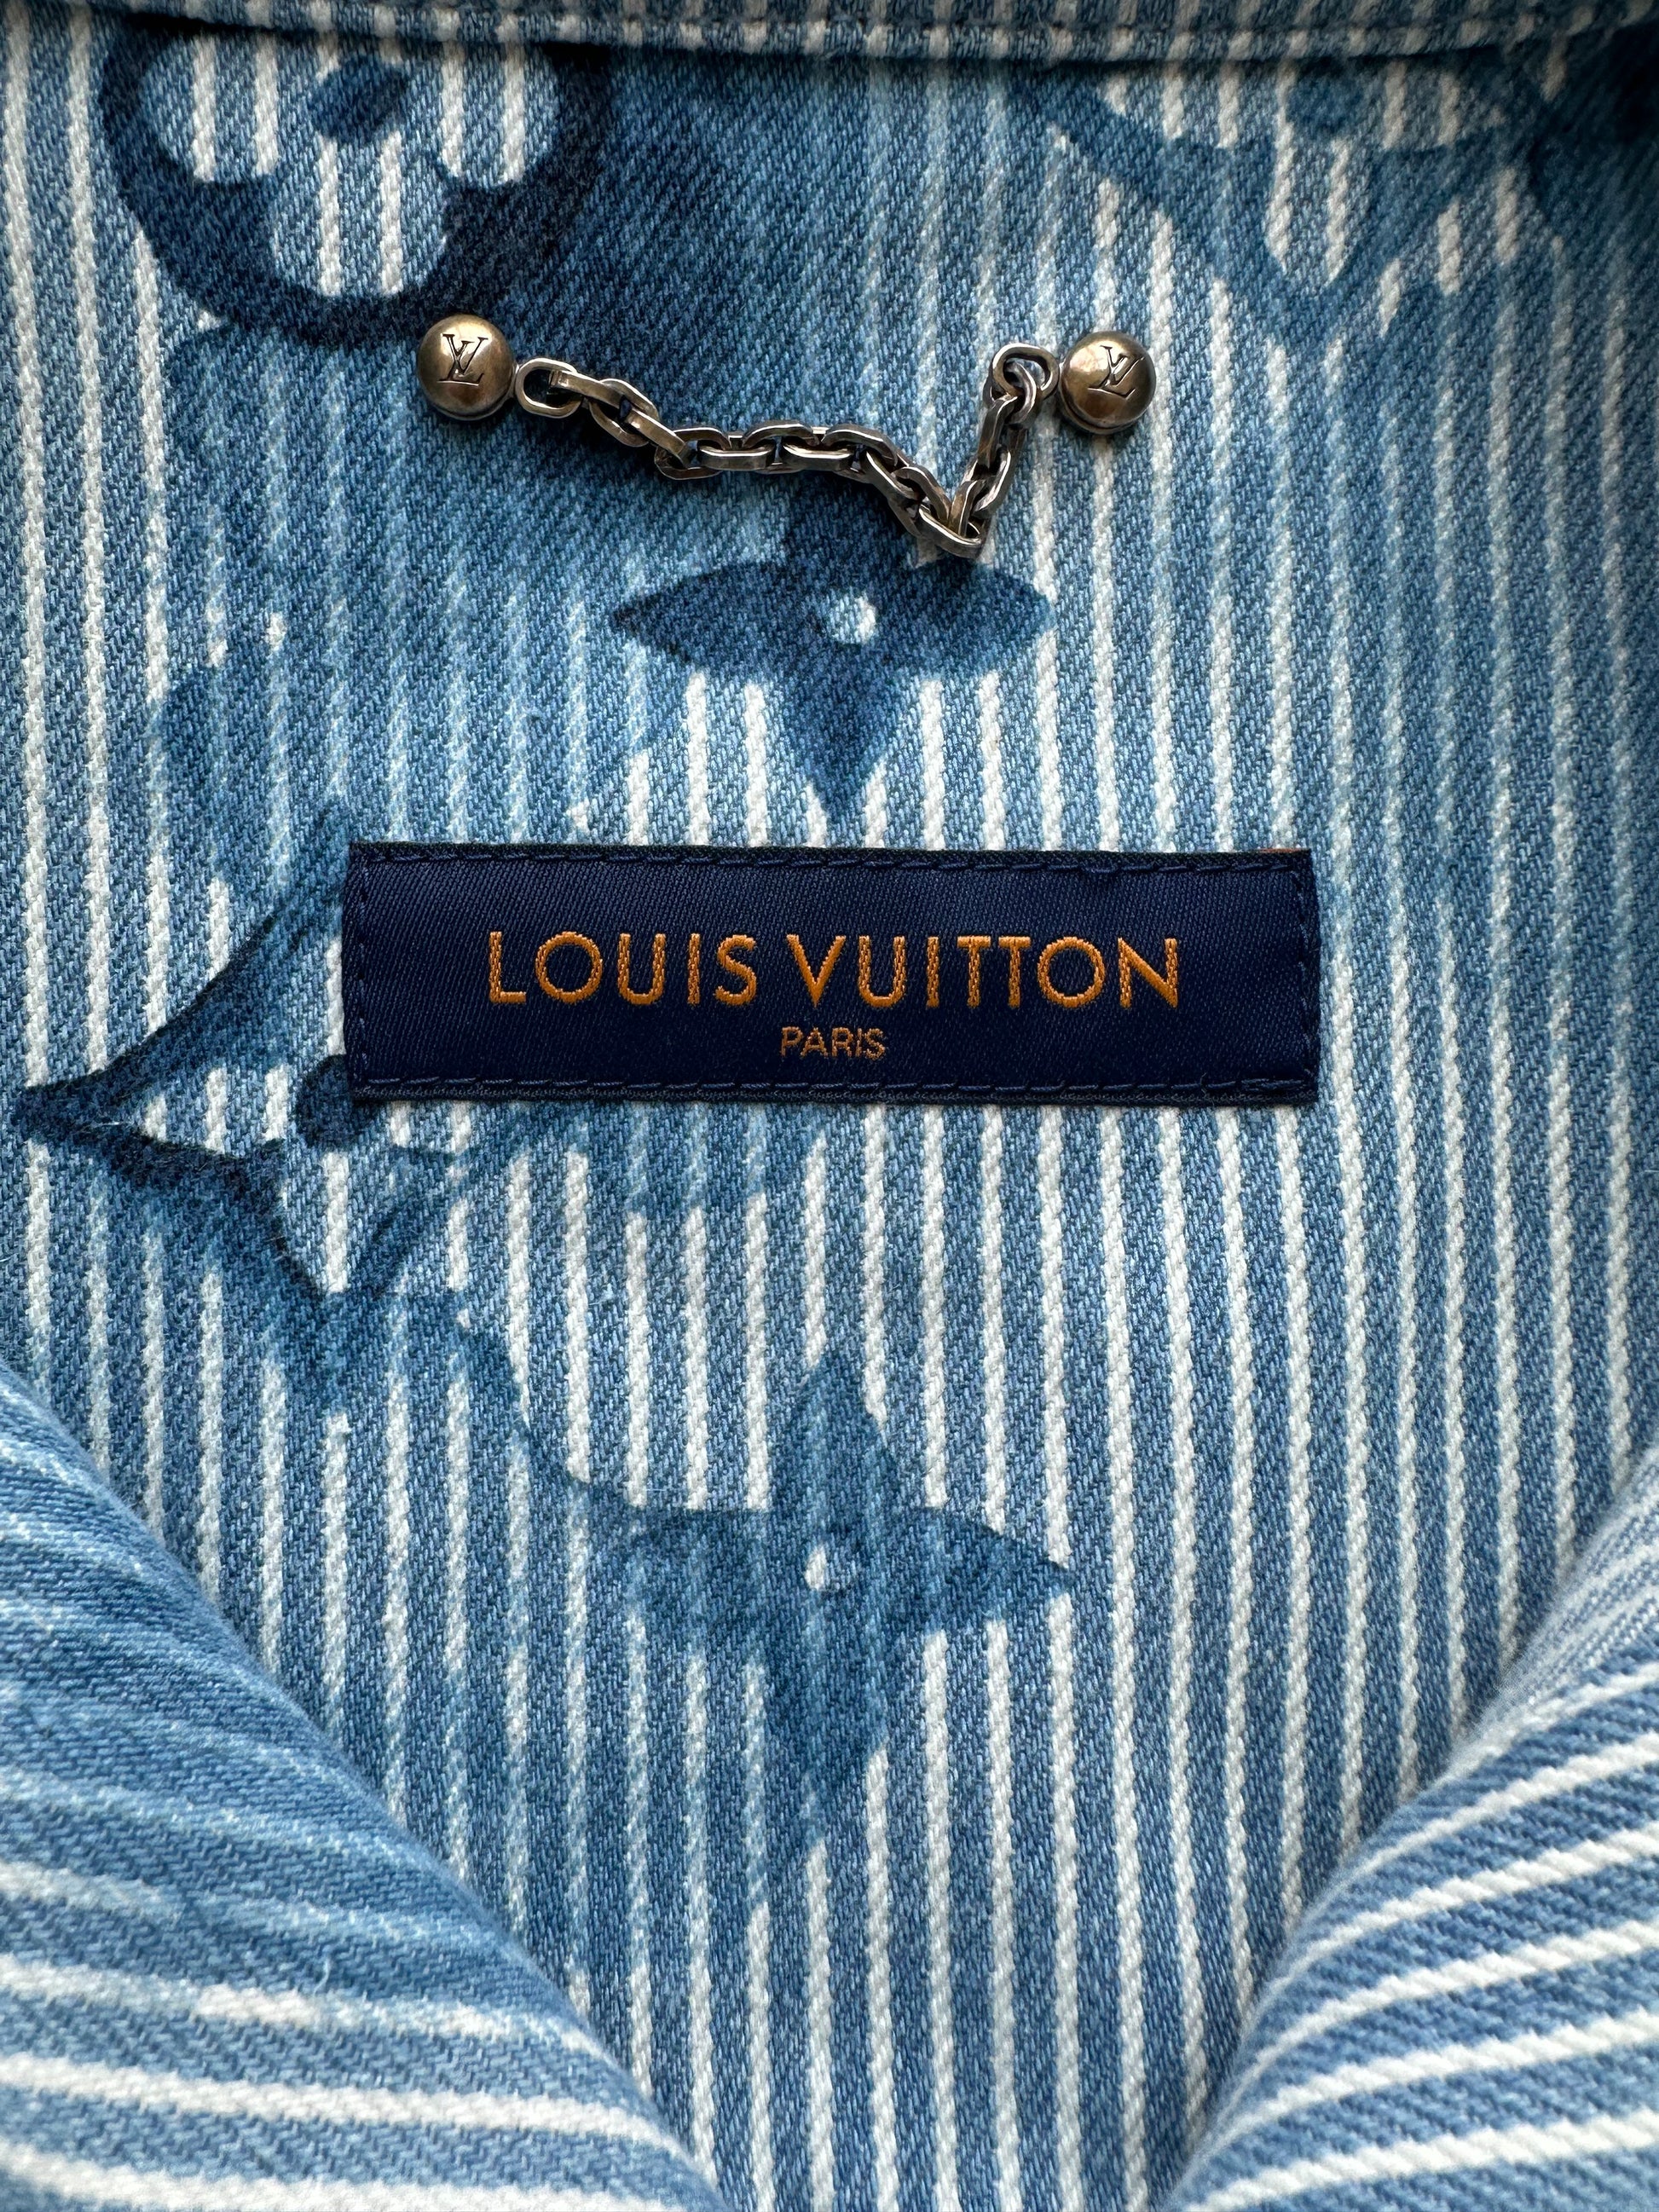 LOUIS VUITTON Watercolor Monogram shirt Size XL